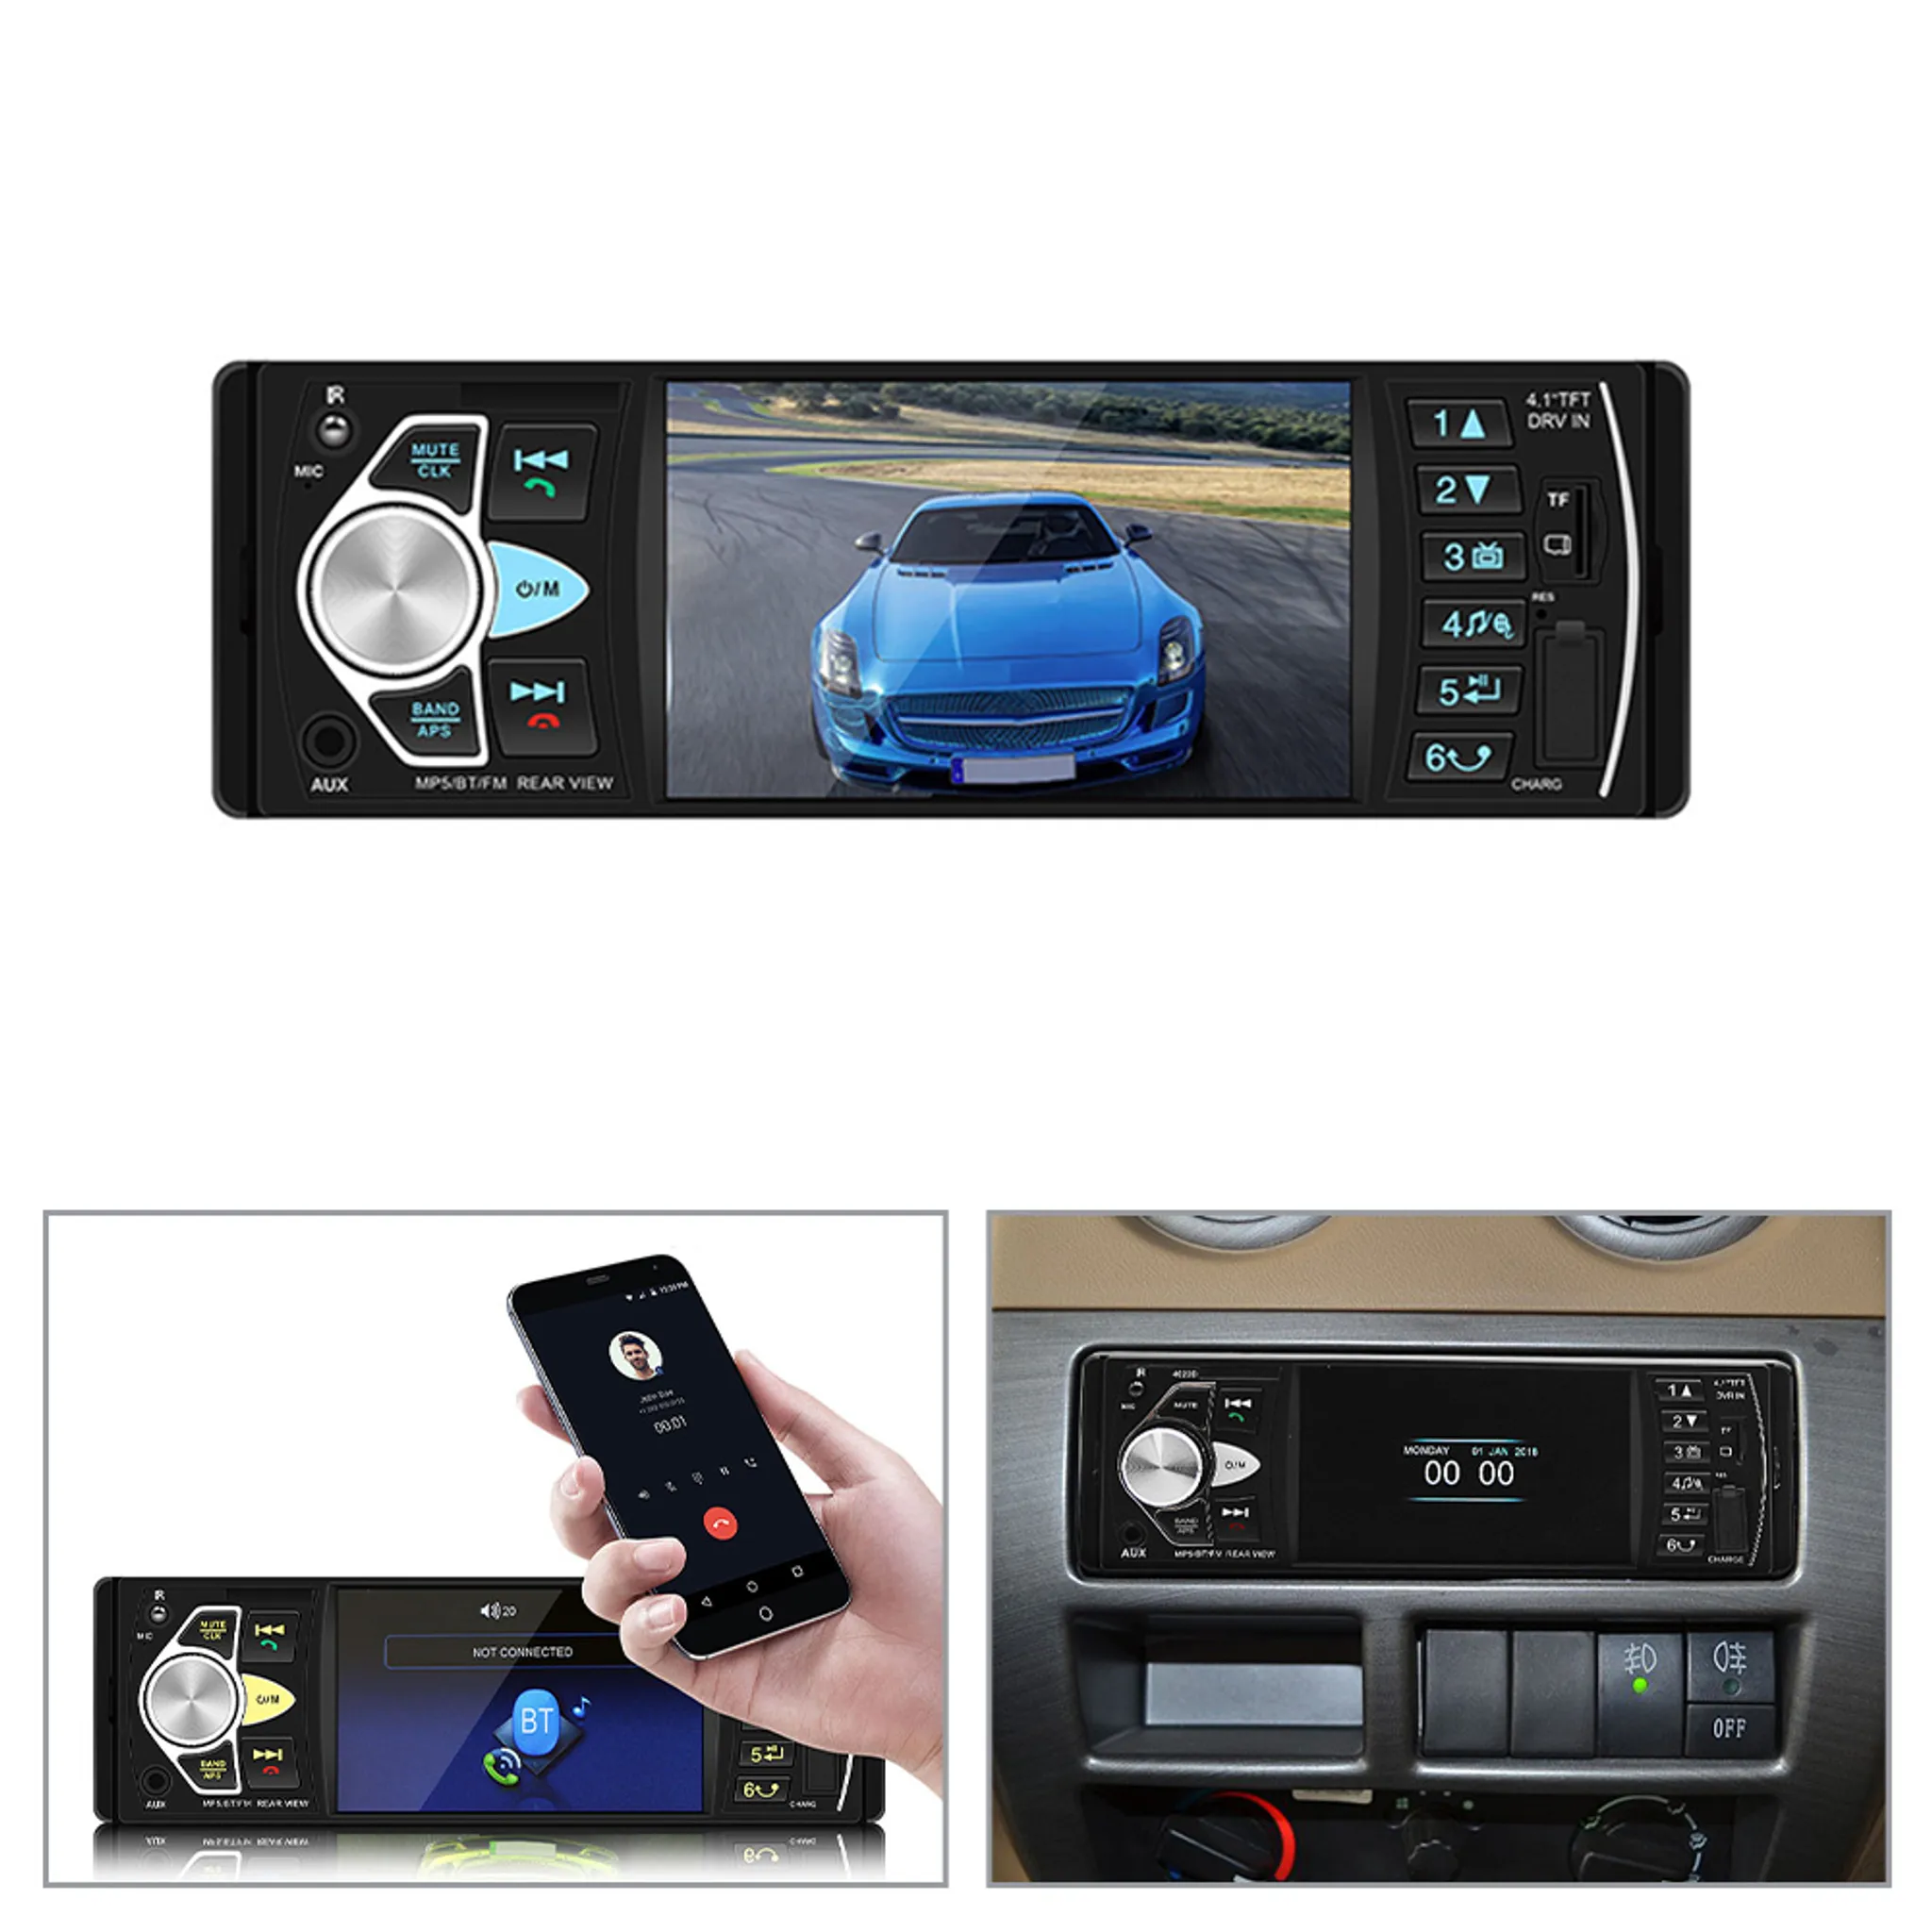 XOMAX XM-V747 Autoradio mit 7 Zoll Touchscreen Bildschirm (kapazitiv,  ausfahrbar), Bluetooth, USB, SD, AUX, 1 DIN